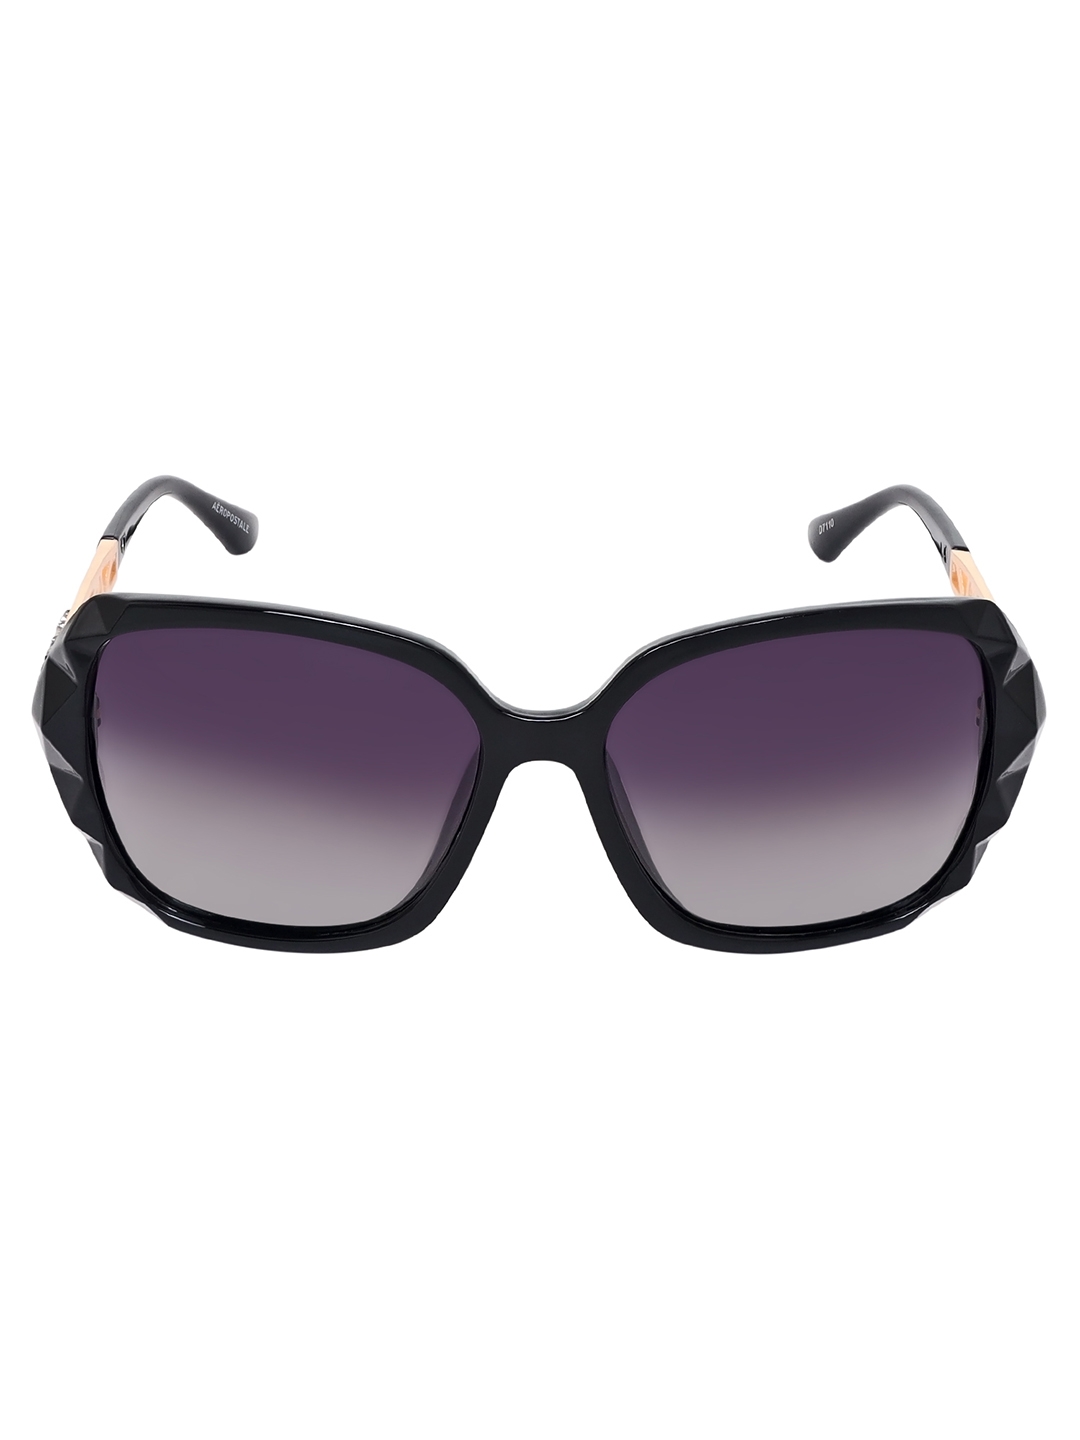 Aeropostale | Aeropostale AERO_SUN_2538_C1 Summer Sunglasses with UV protection Polarized Anti Glare Summer Style Black with Diamond Transparent Frame